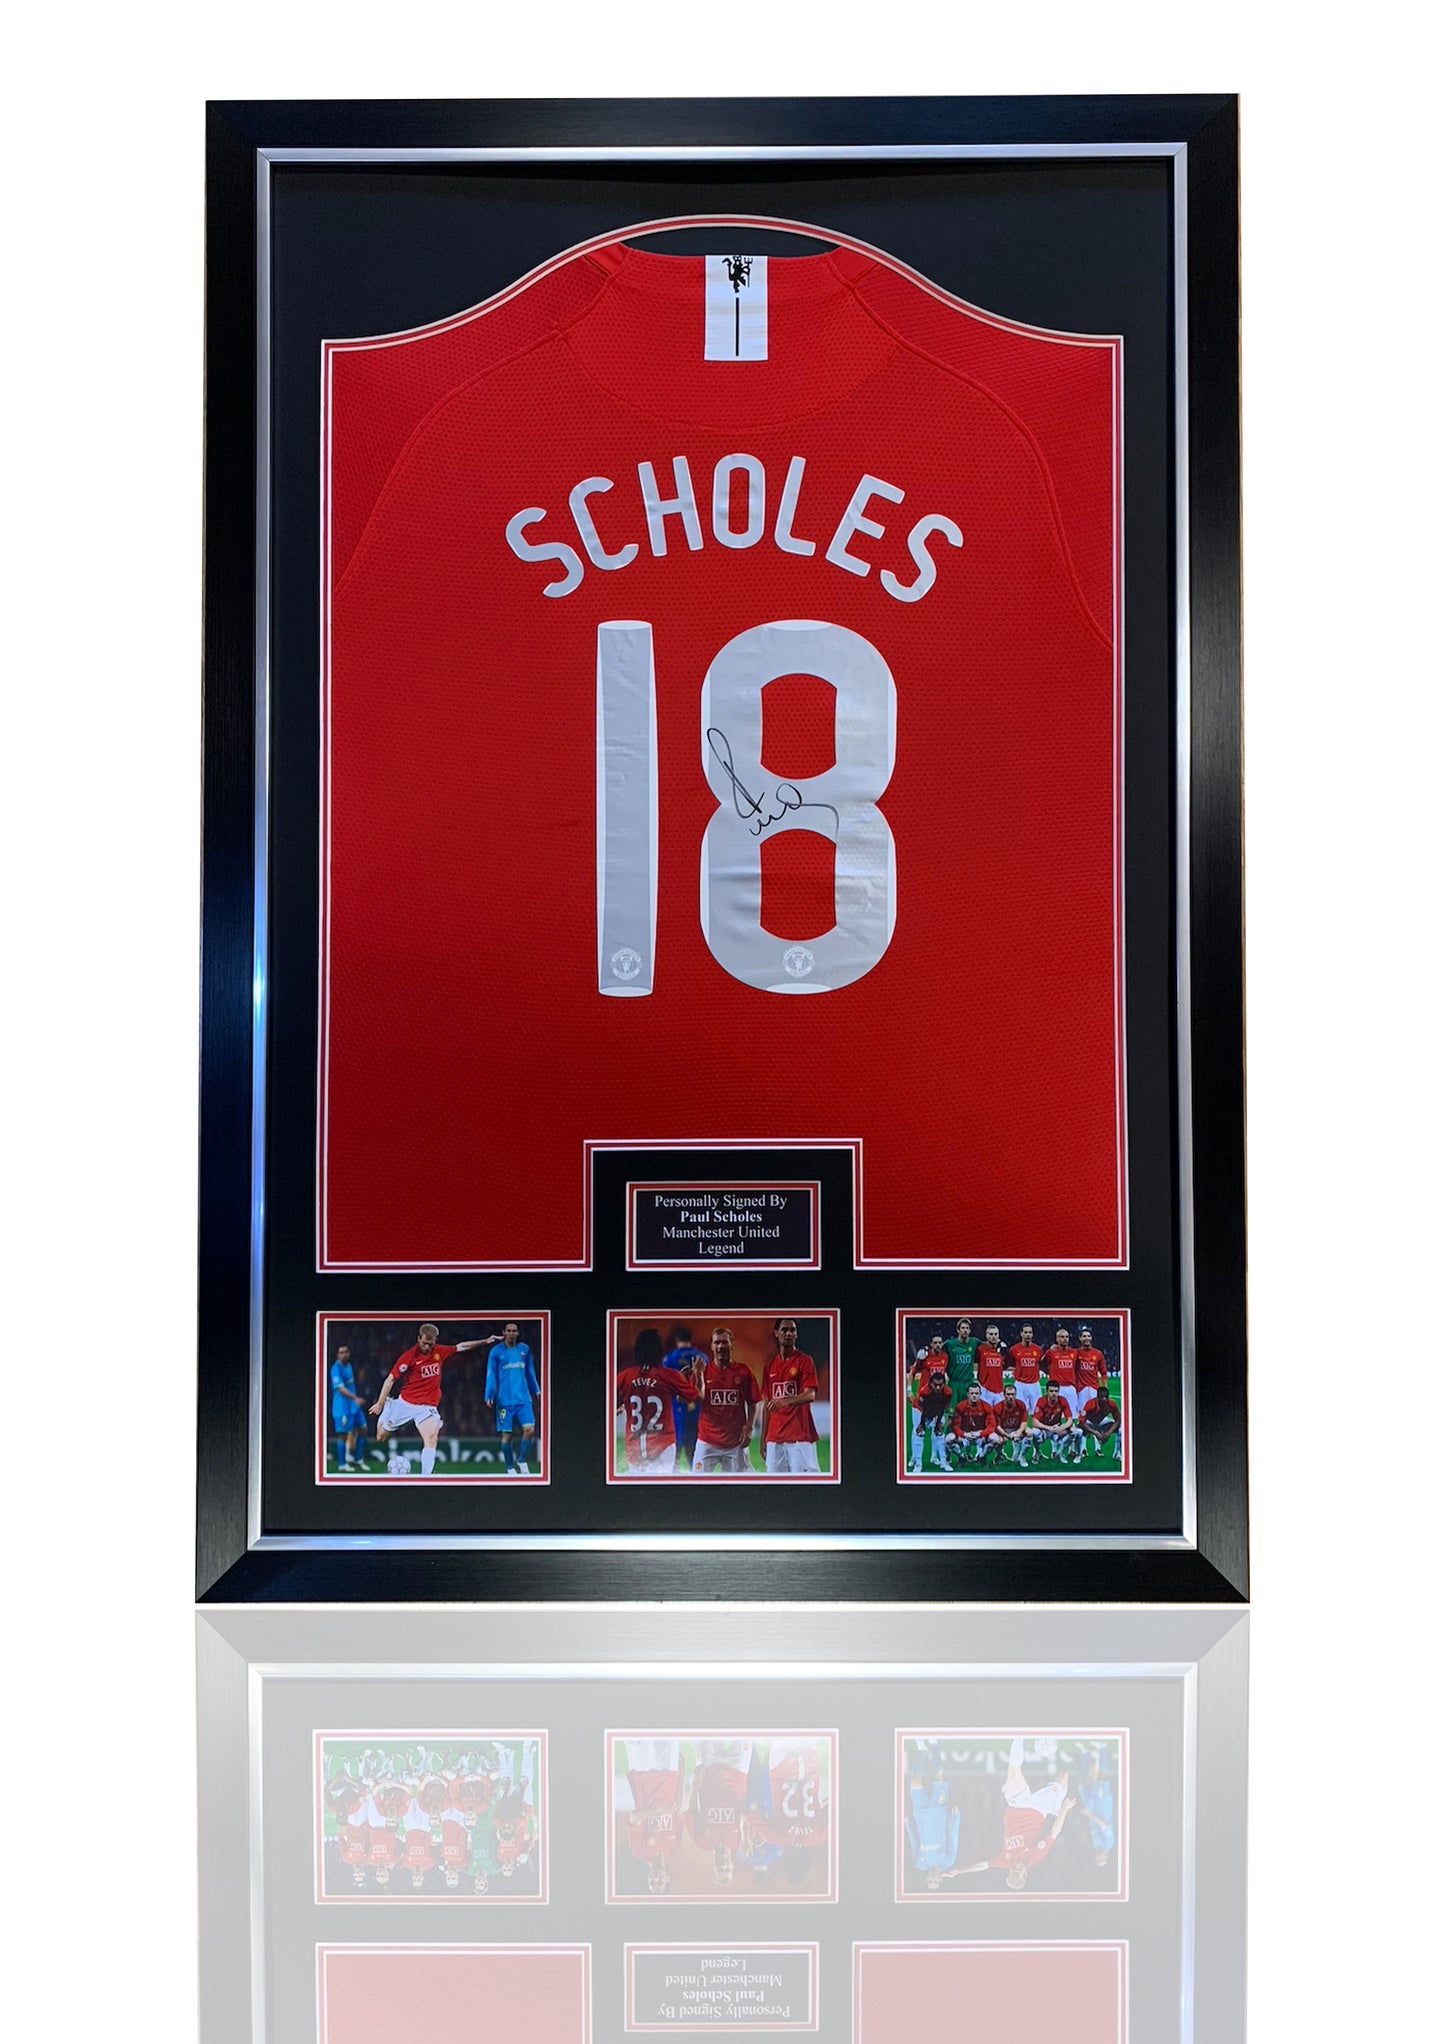 Paul Scholes framed Signed 2008 Manchester United Shirt deluxe frame